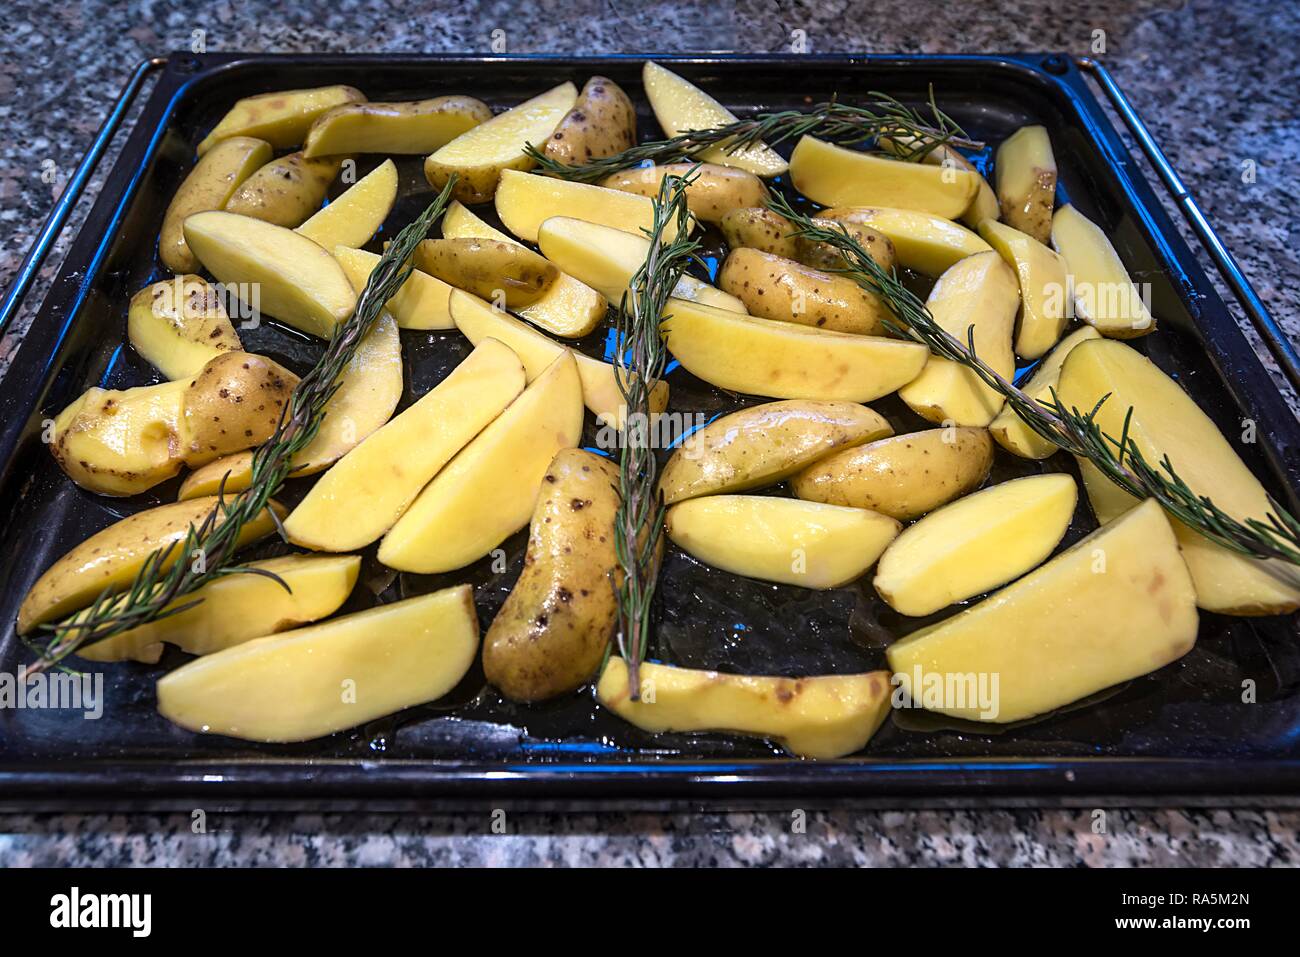 https://c8.alamy.com/comp/RA5M2N/quartered-oiled-rosemary-potatoes-on-a-baking-tray-germany-RA5M2N.jpg